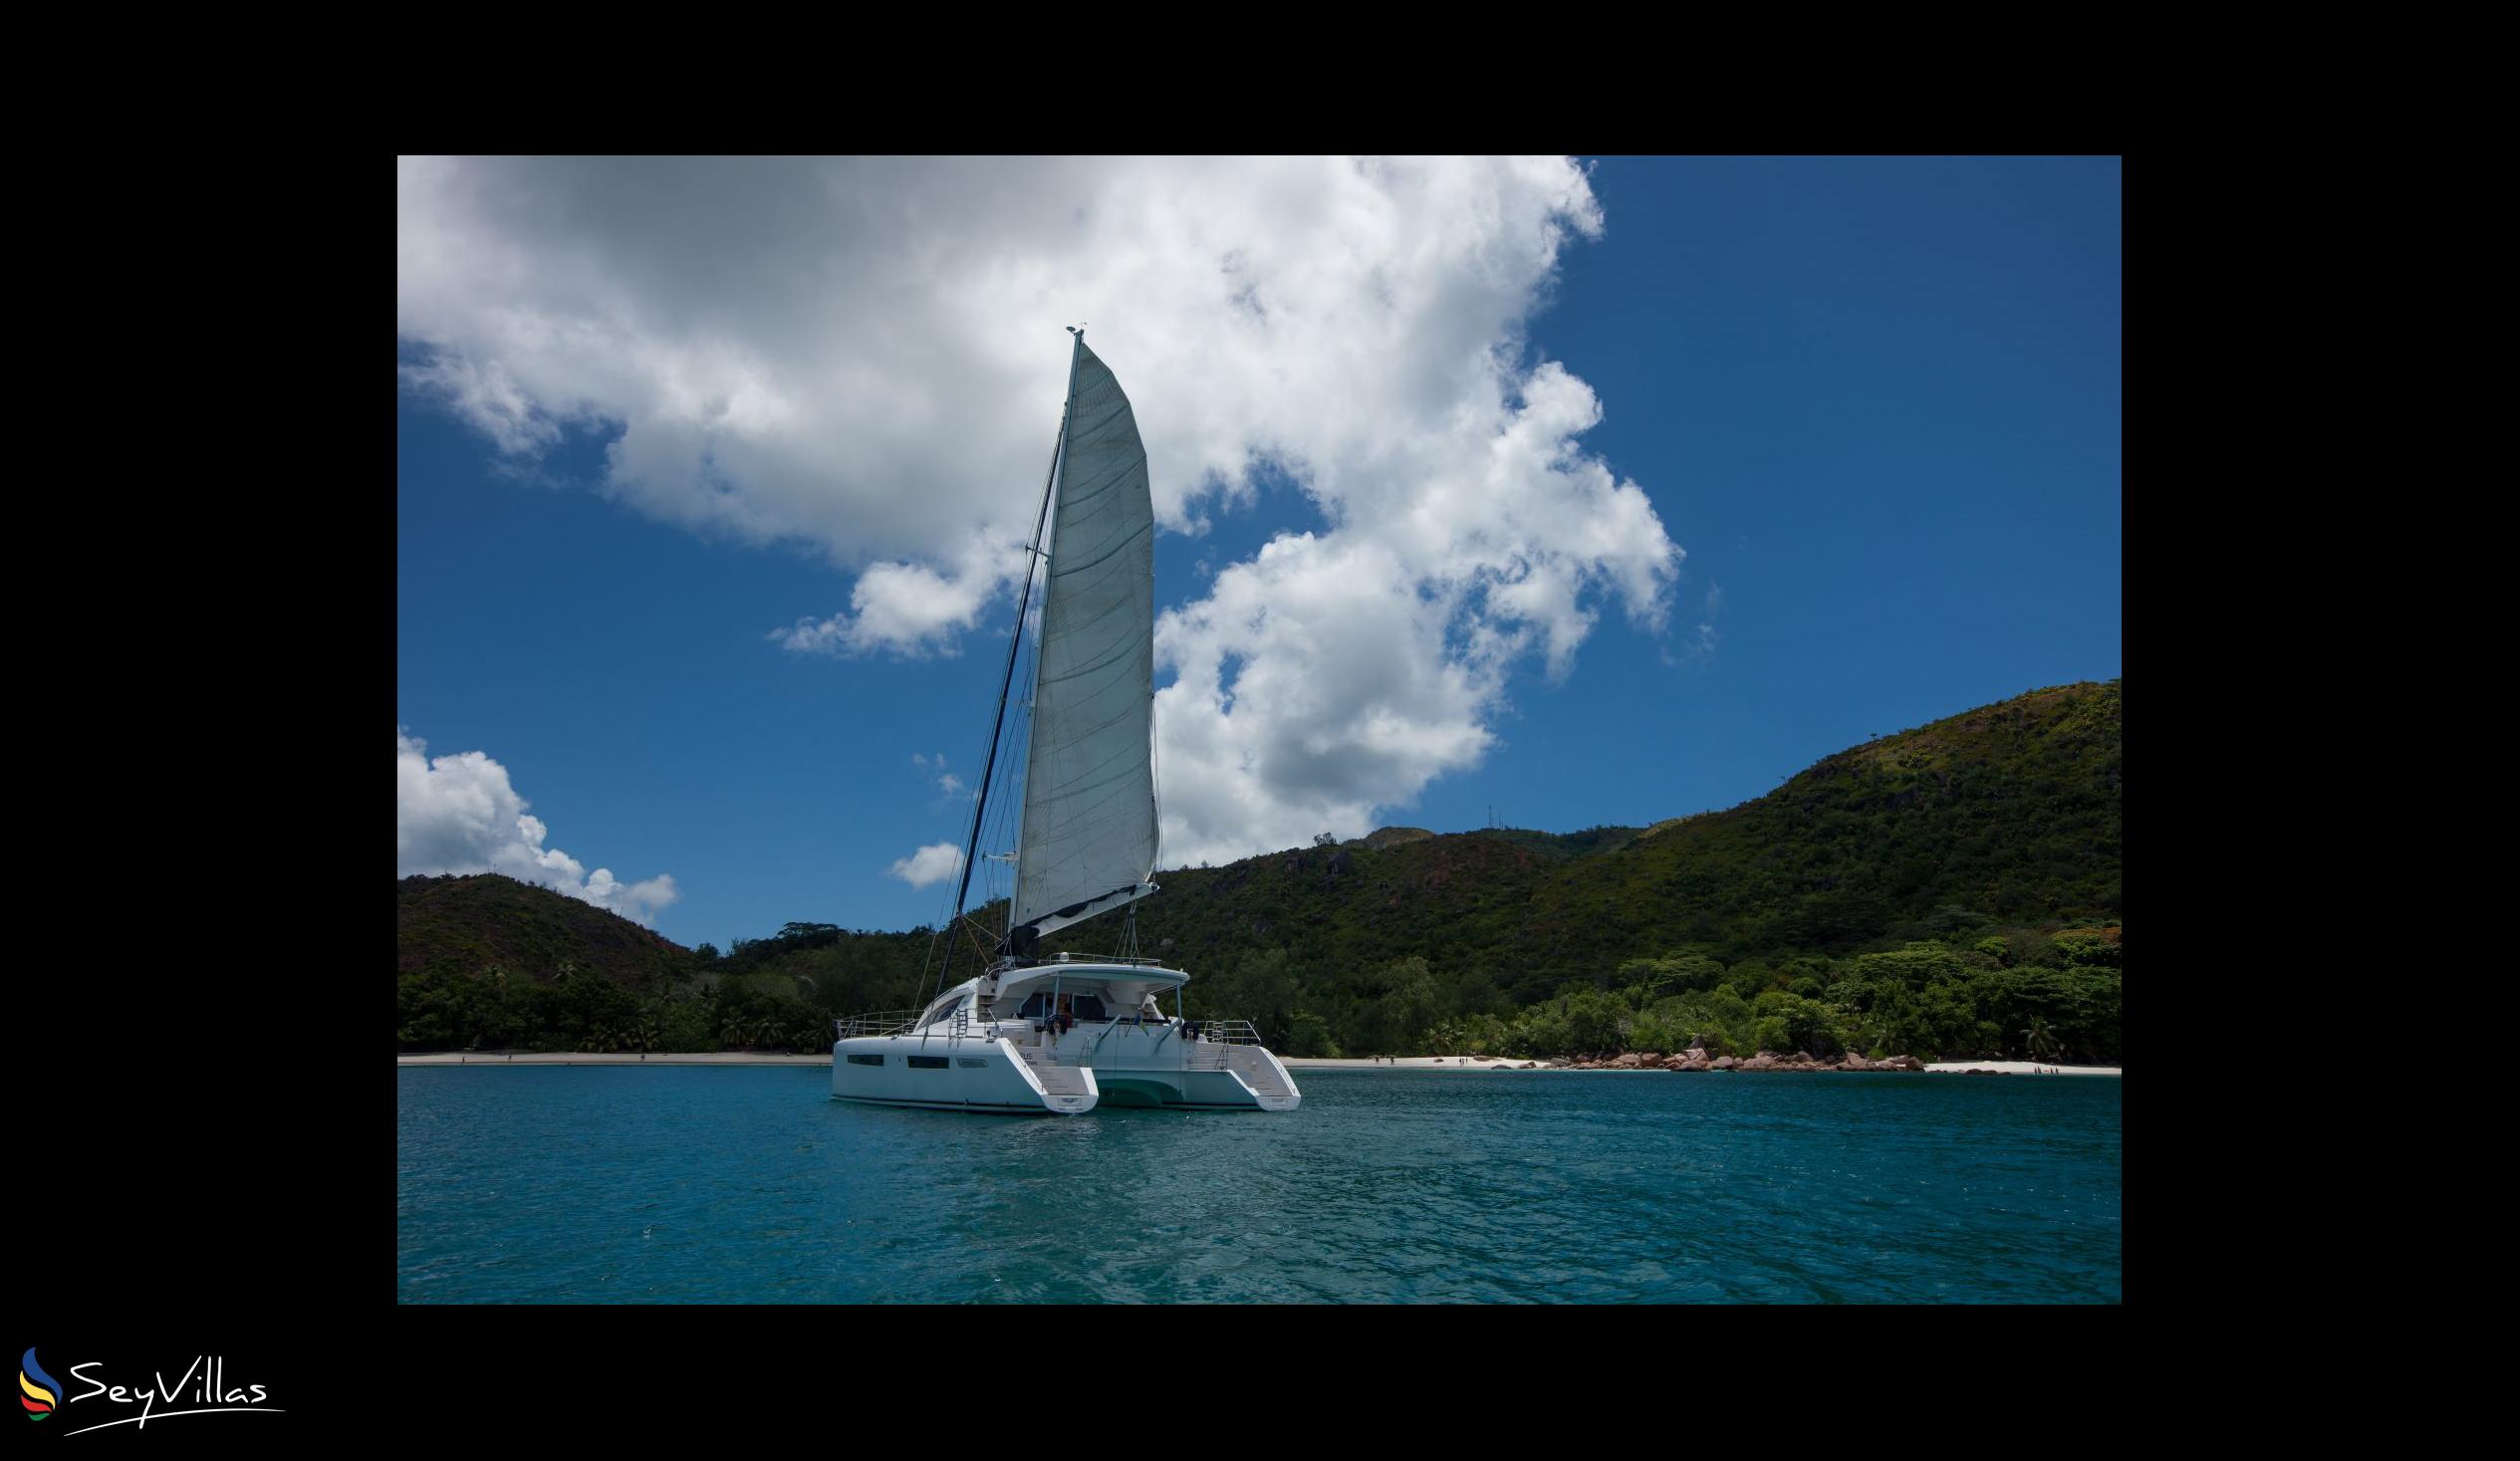 Photo 77: Seyscapes Yacht Charter - Full charter Cirrus - Seychelles (Seychelles)